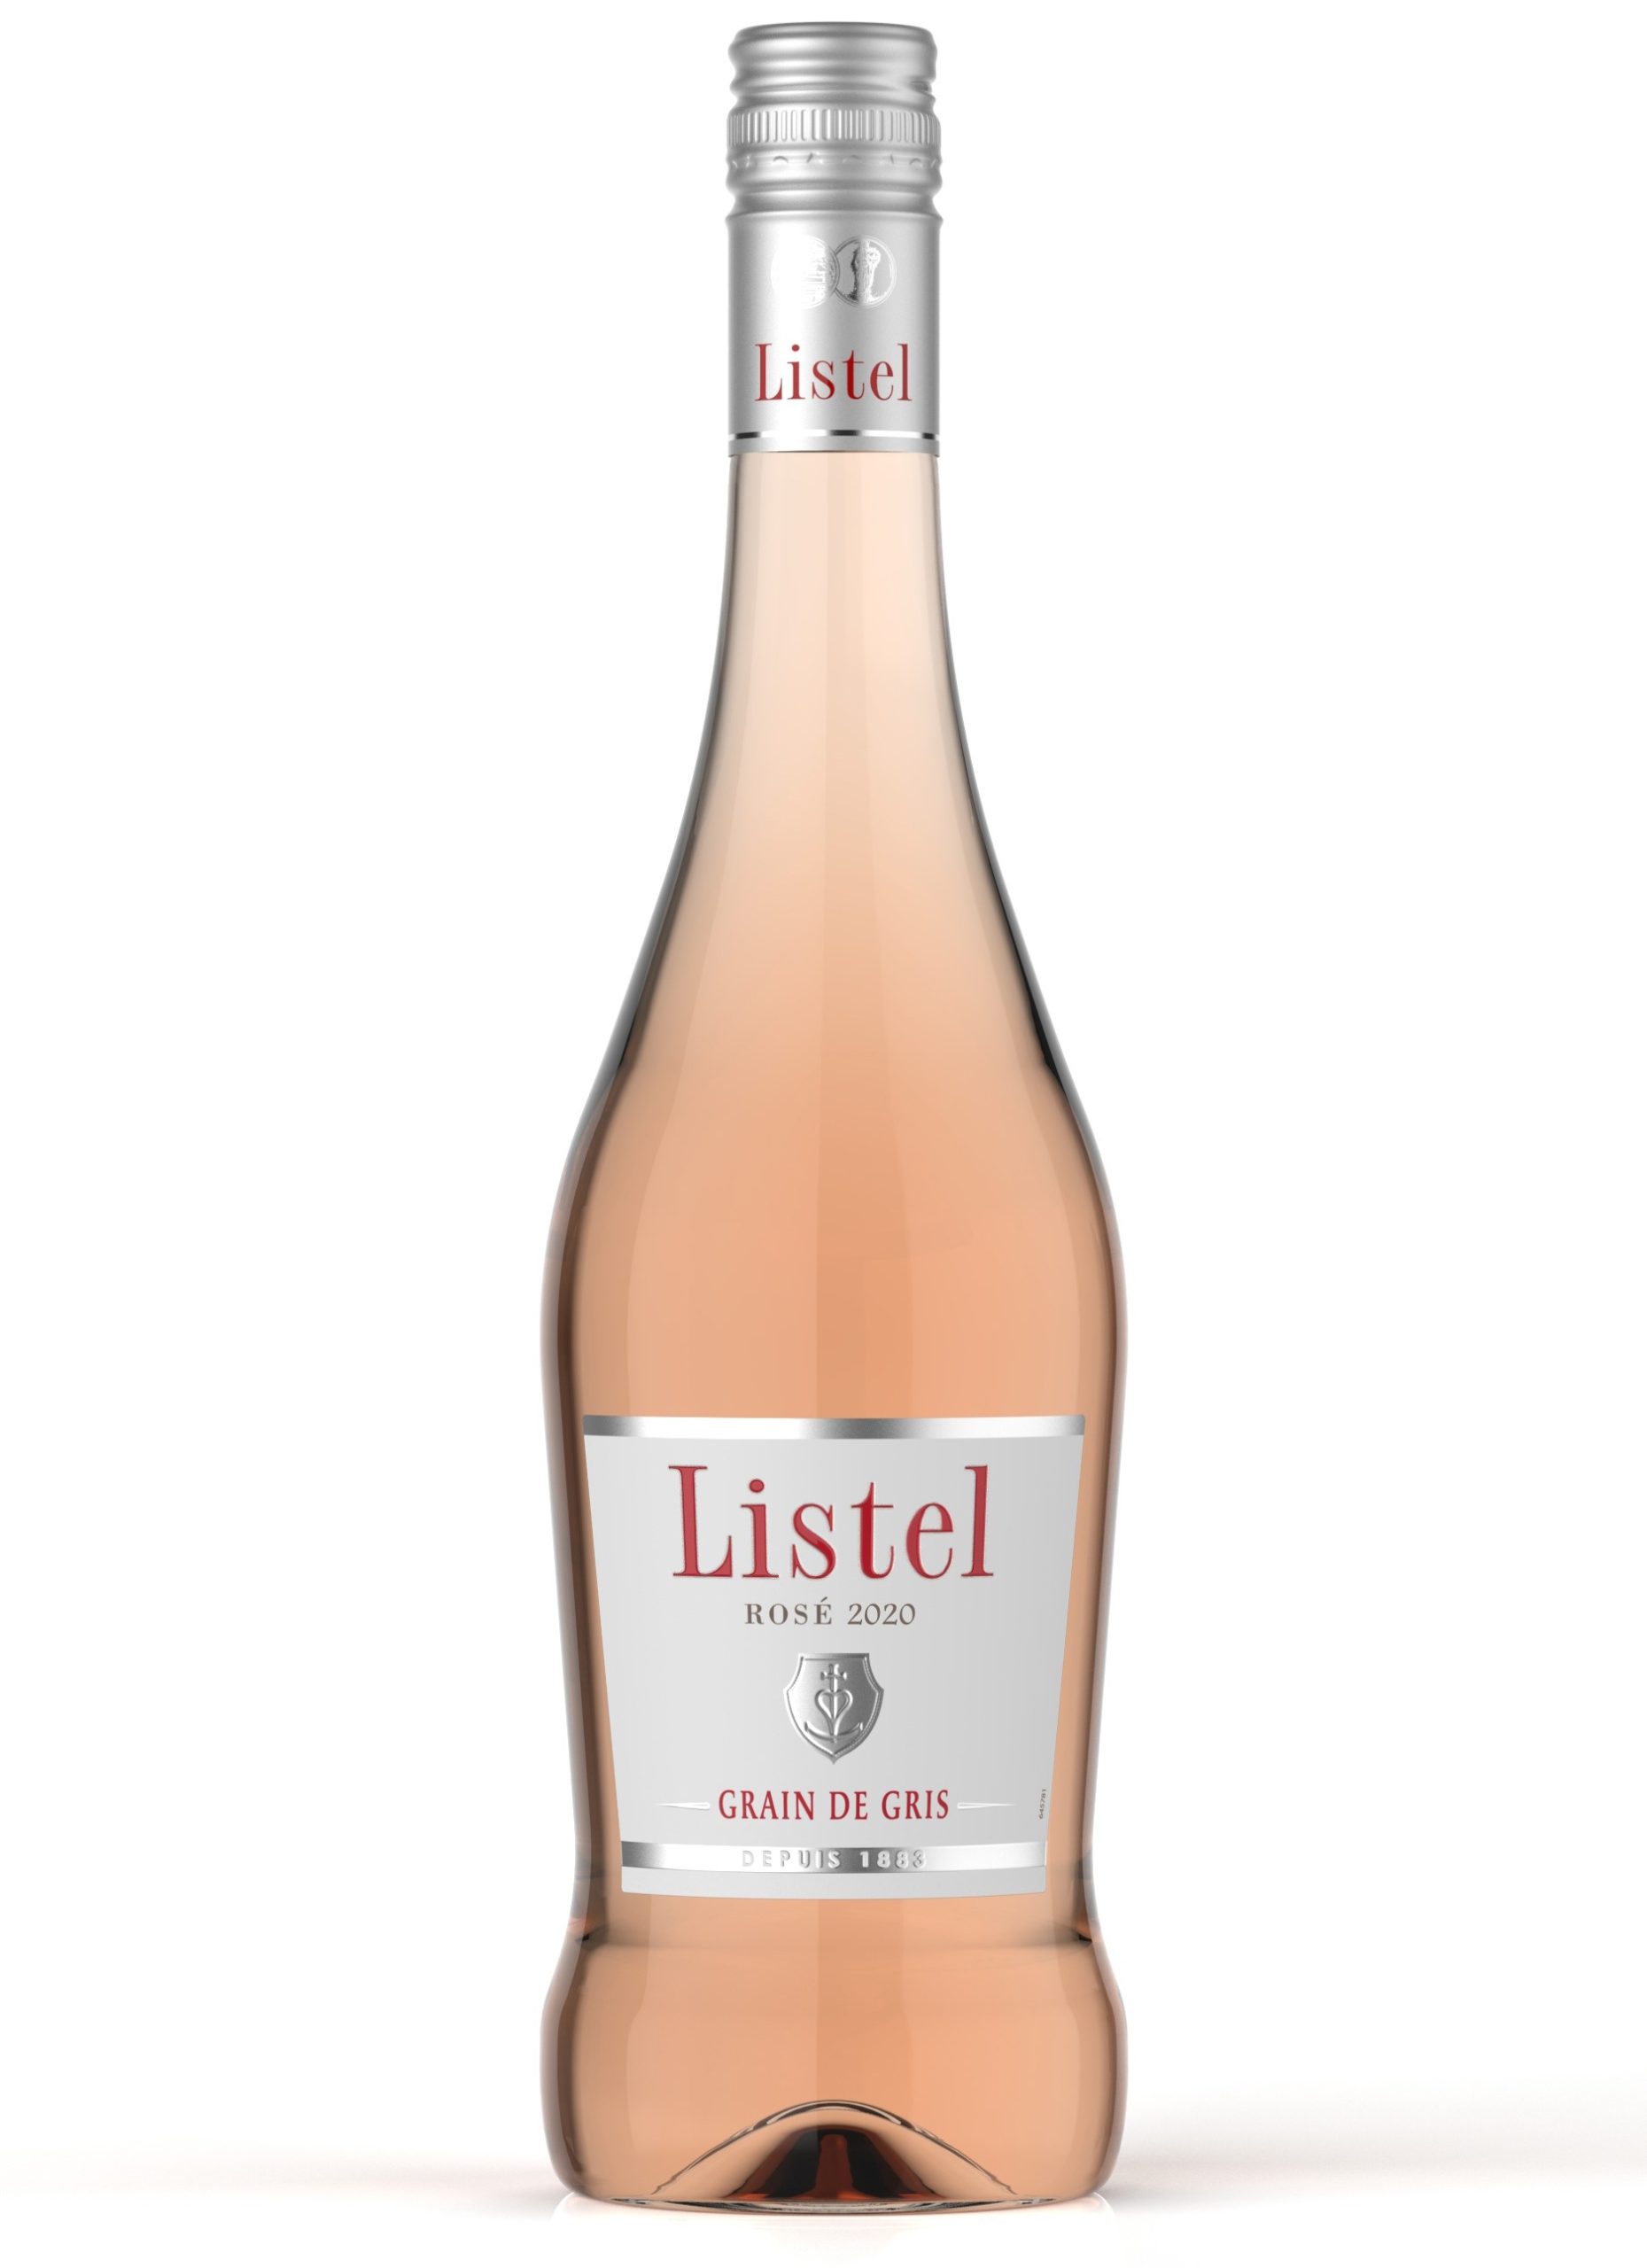 Listel rose wine bottle, Christmas must-haves